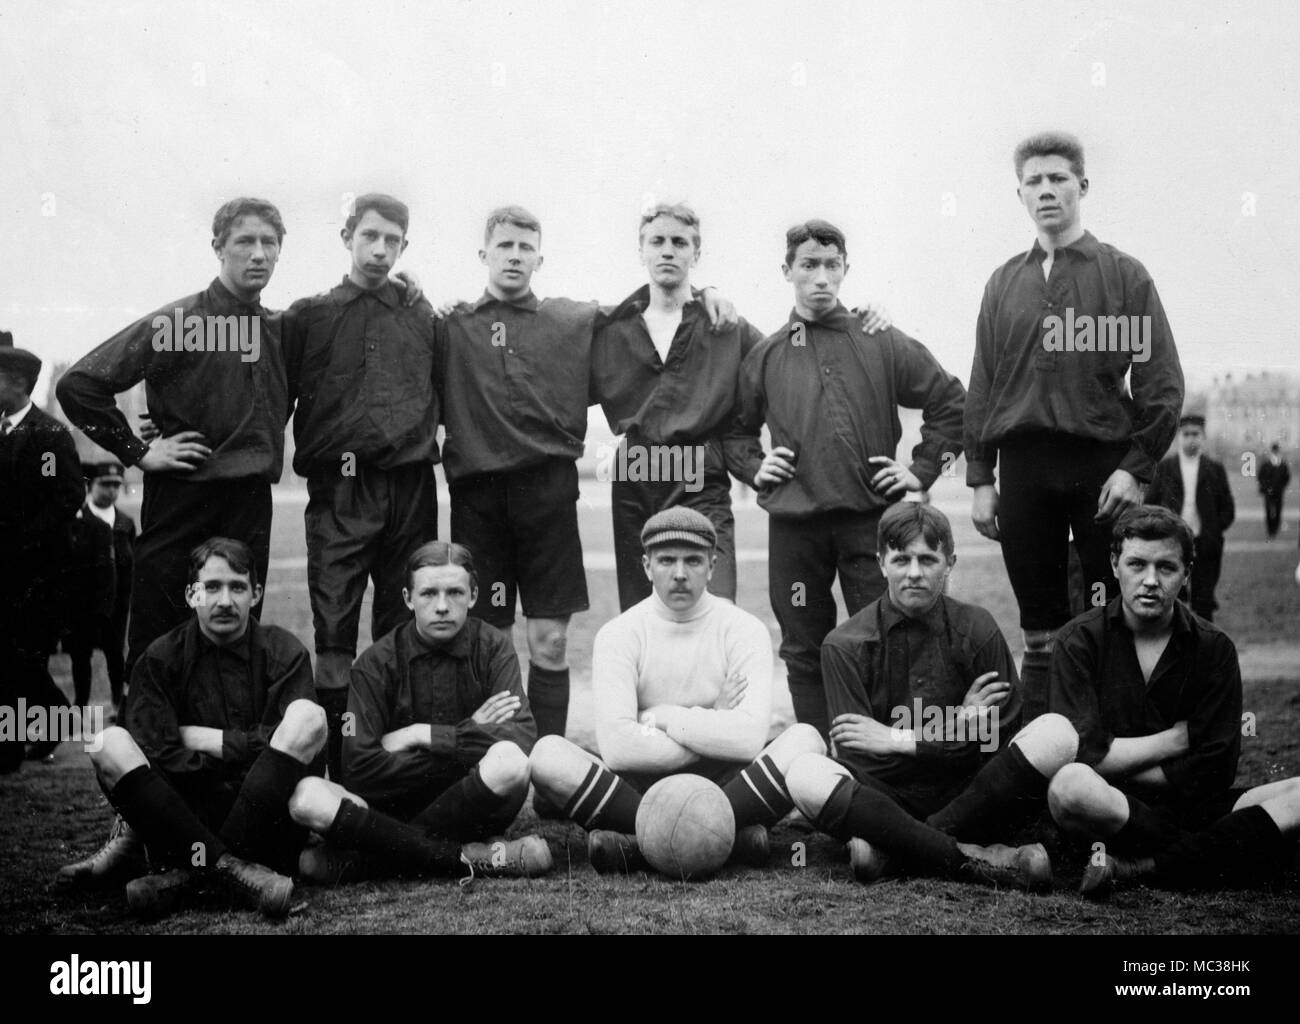 Schwedische Fußballmannschaft Gruppenporträt, Ca. 1912. Stockfoto